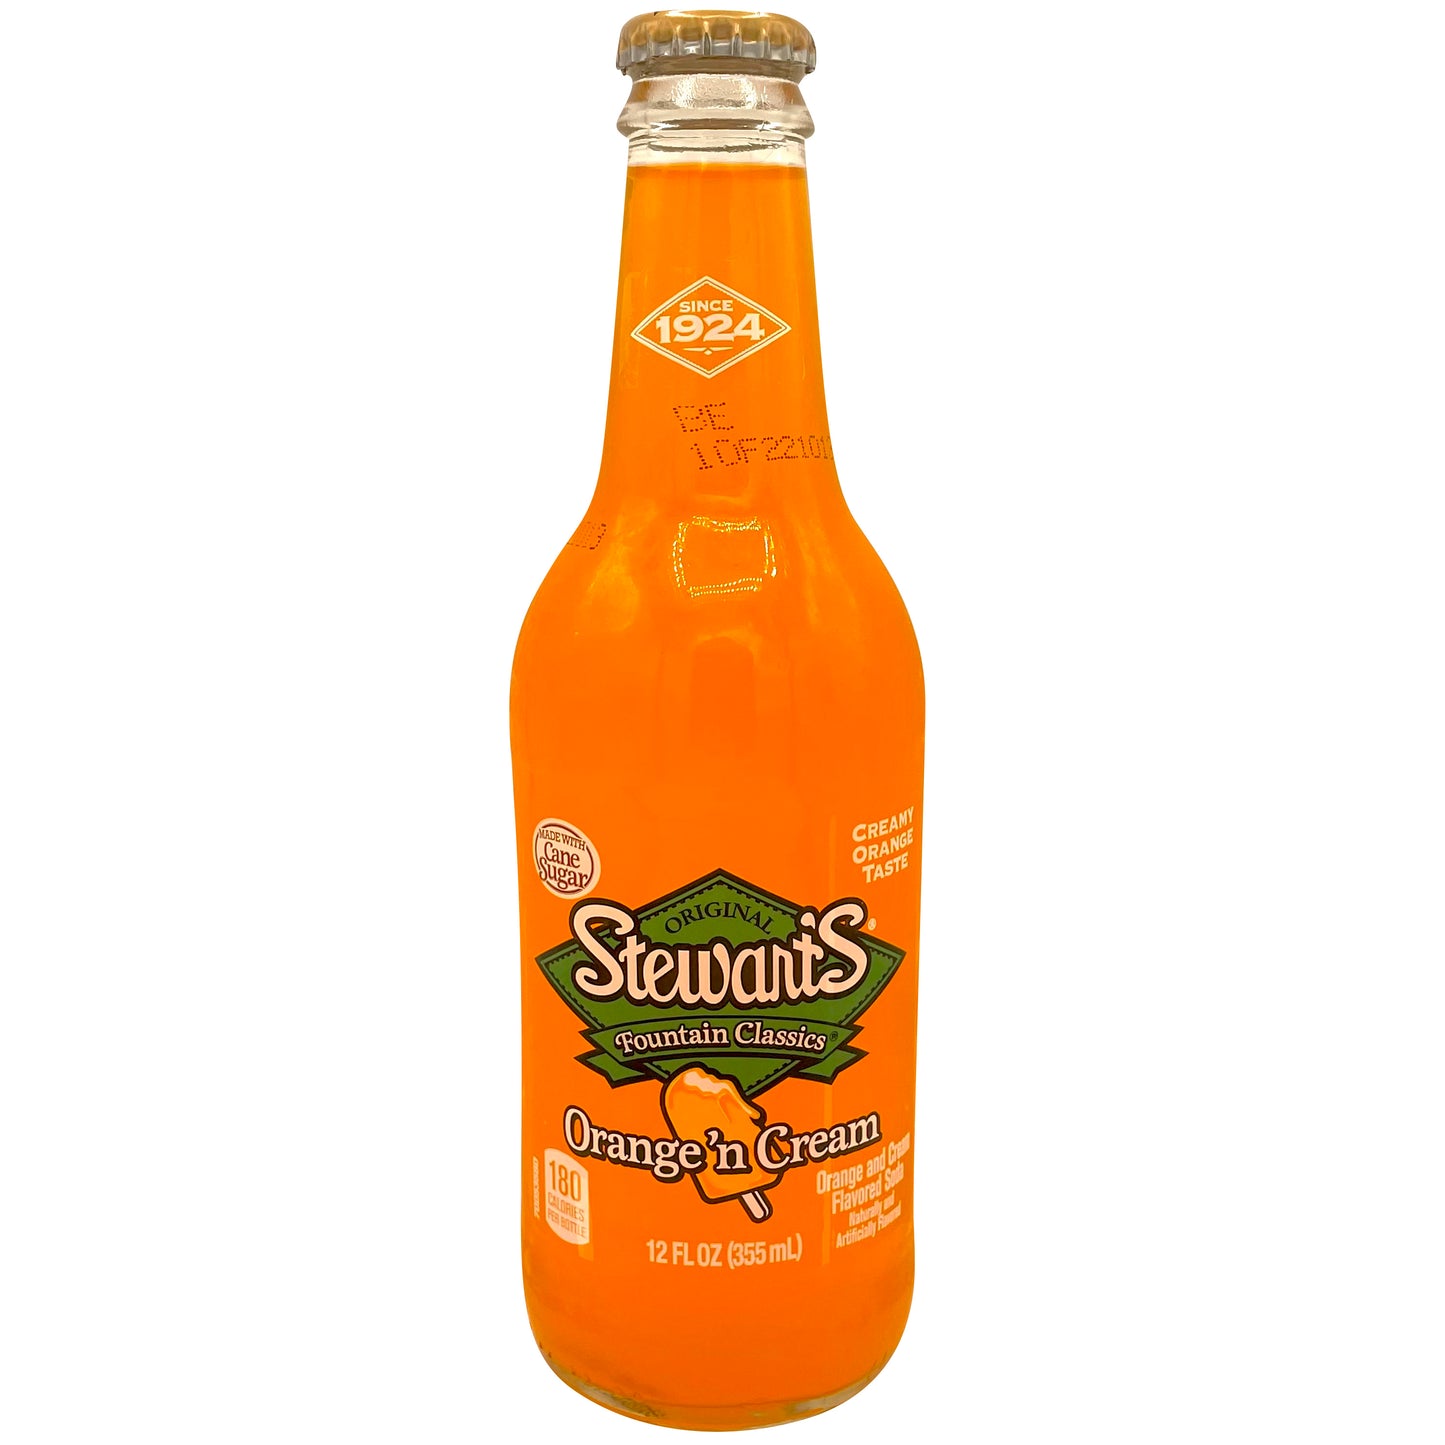 Stewart's Orange'n Cream Pop - Sugar Rushed